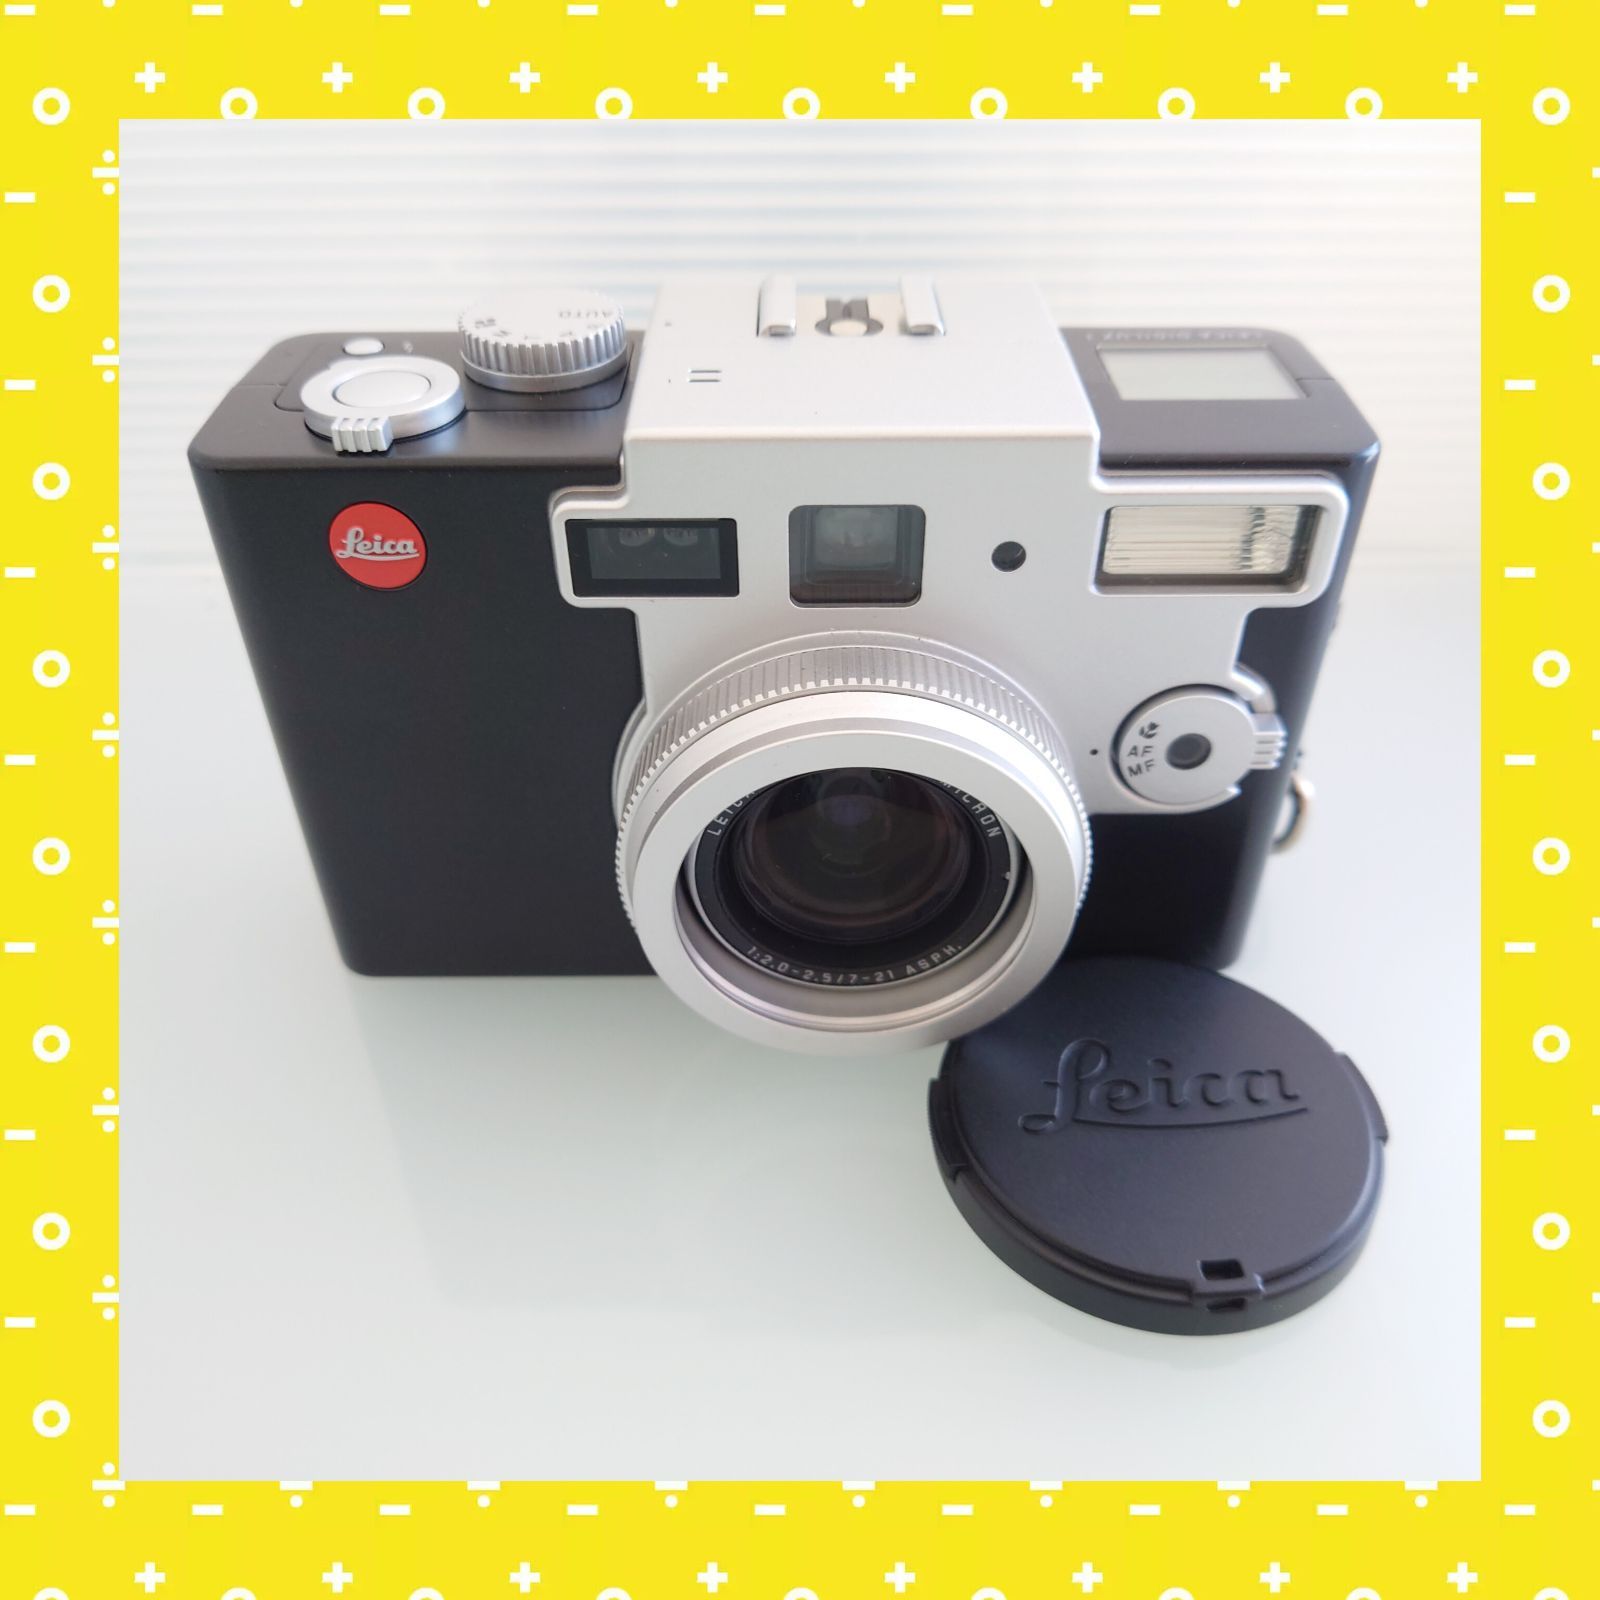 Leica ライカ Digilux 1 - デジタルカメラ